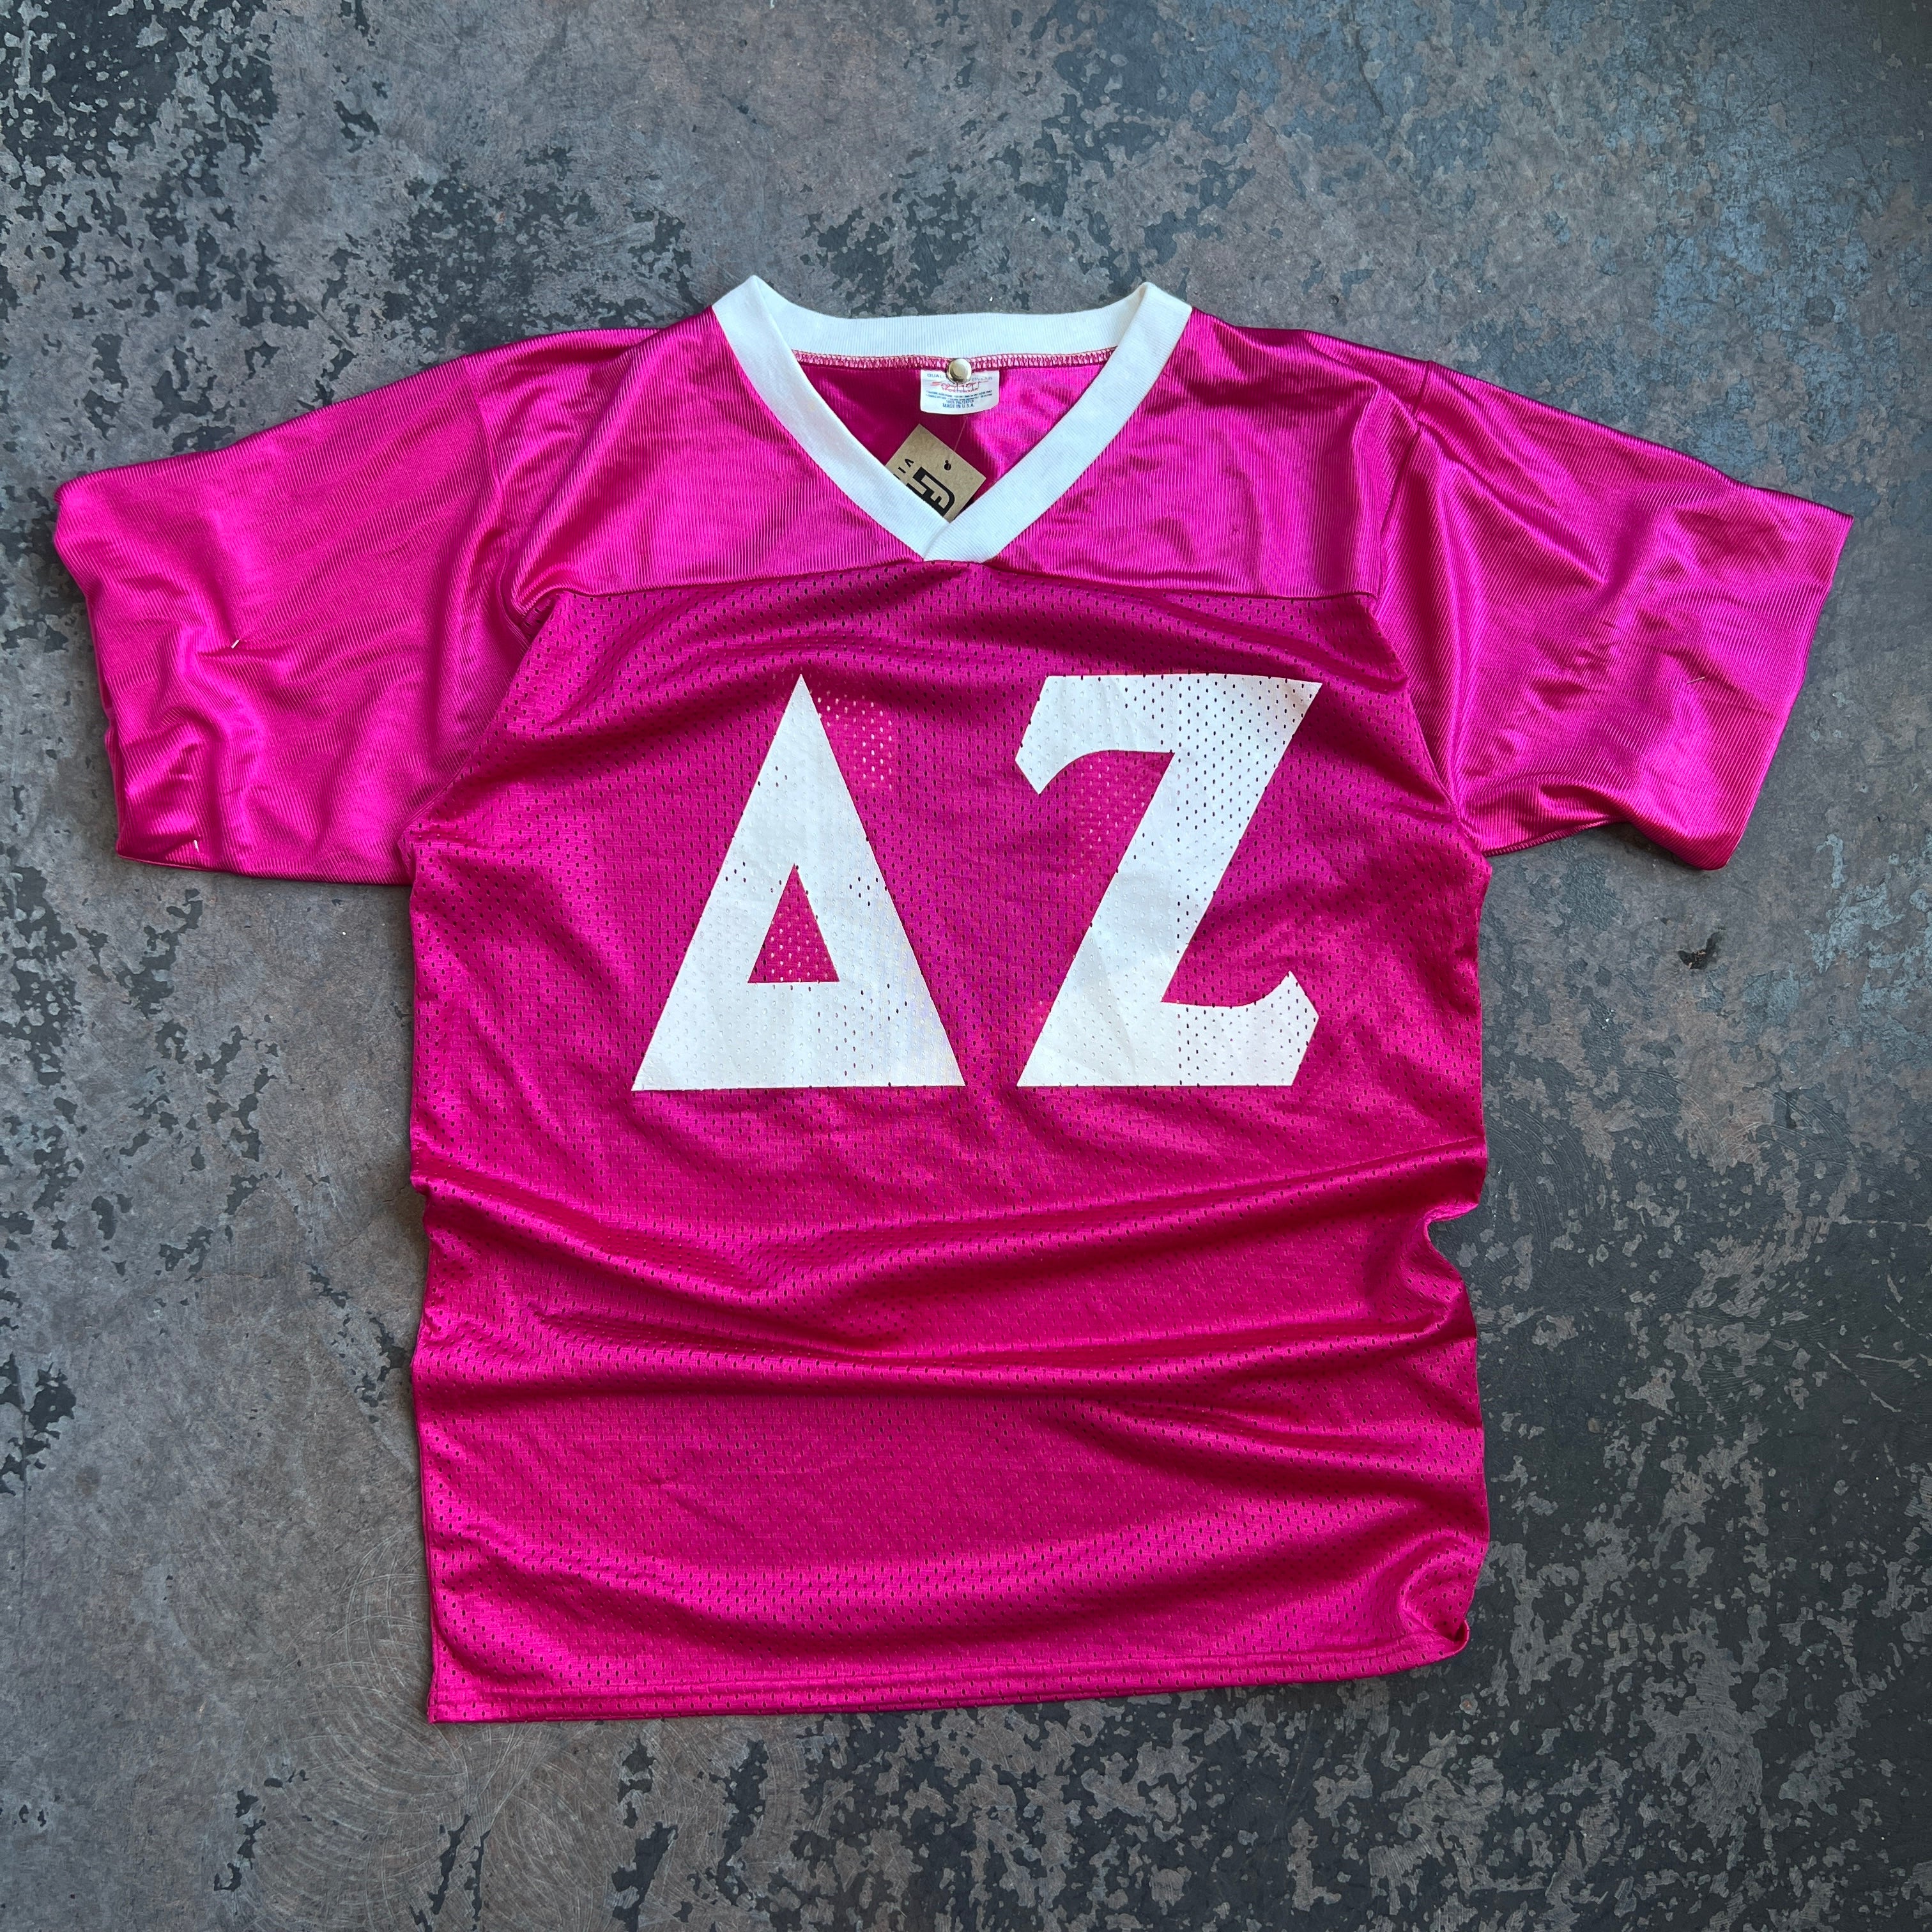 Pink Vintage Football Jersey